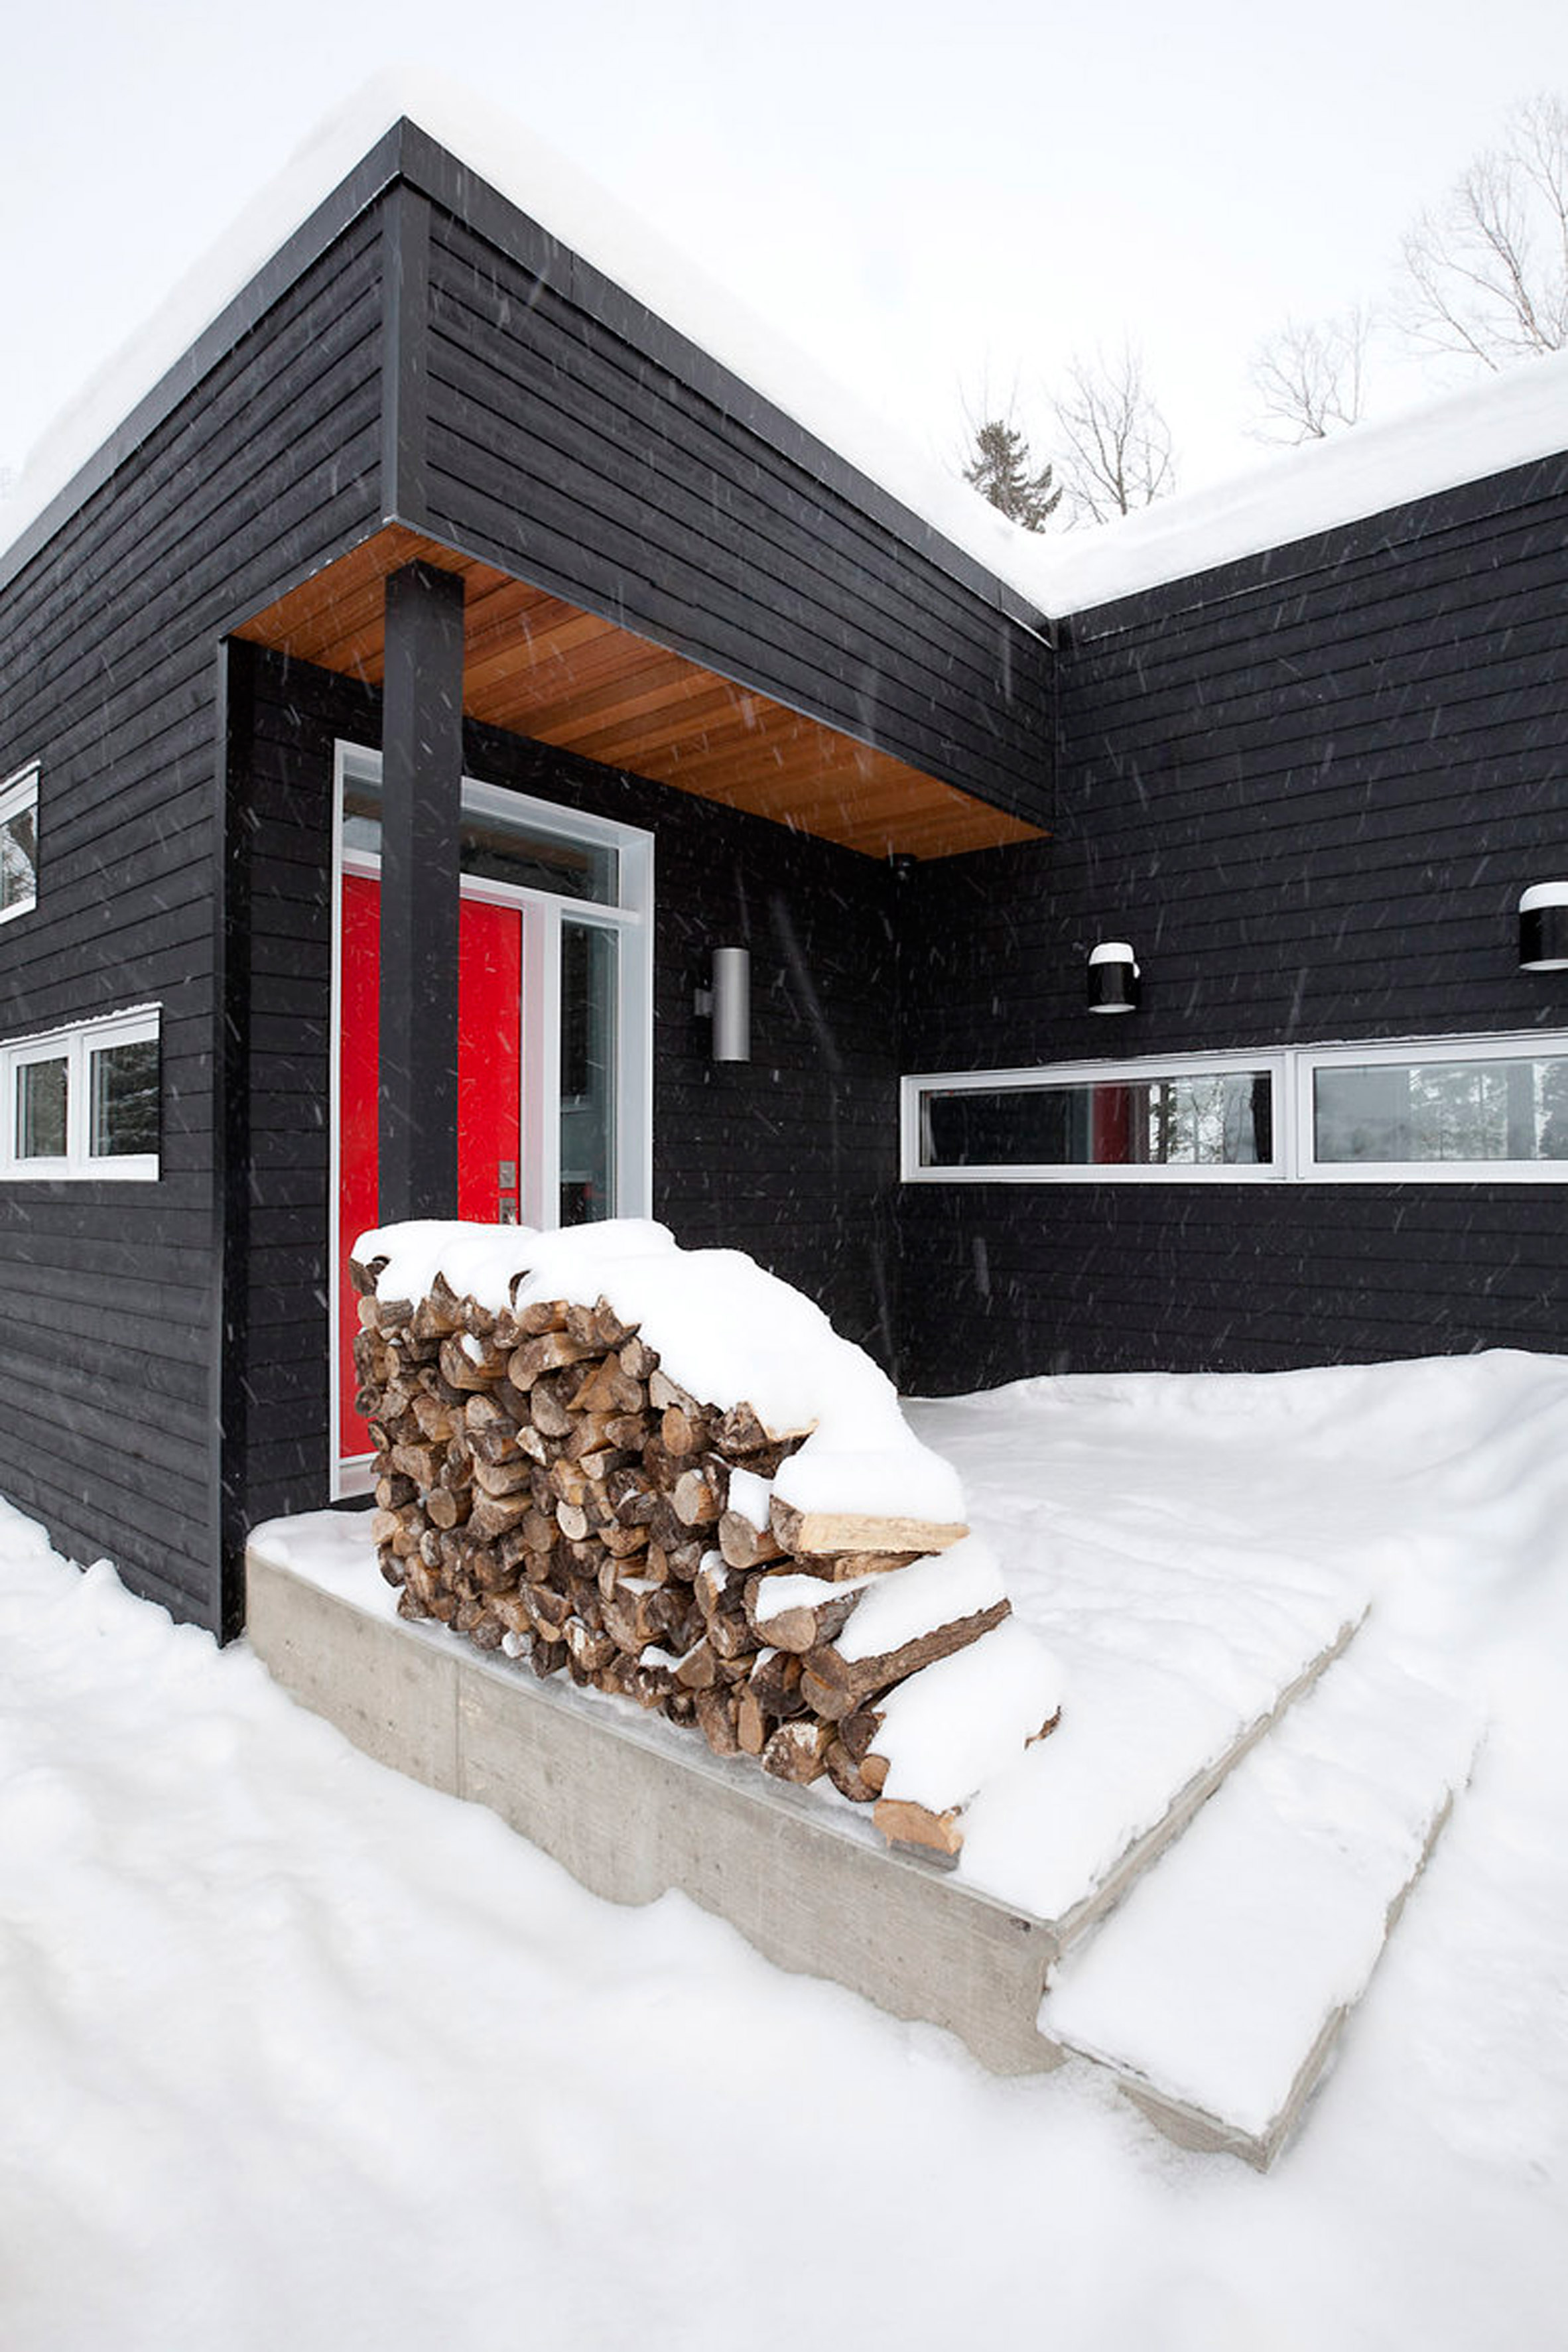 Ski lodge by Kl.tz Design and DKA Architecte